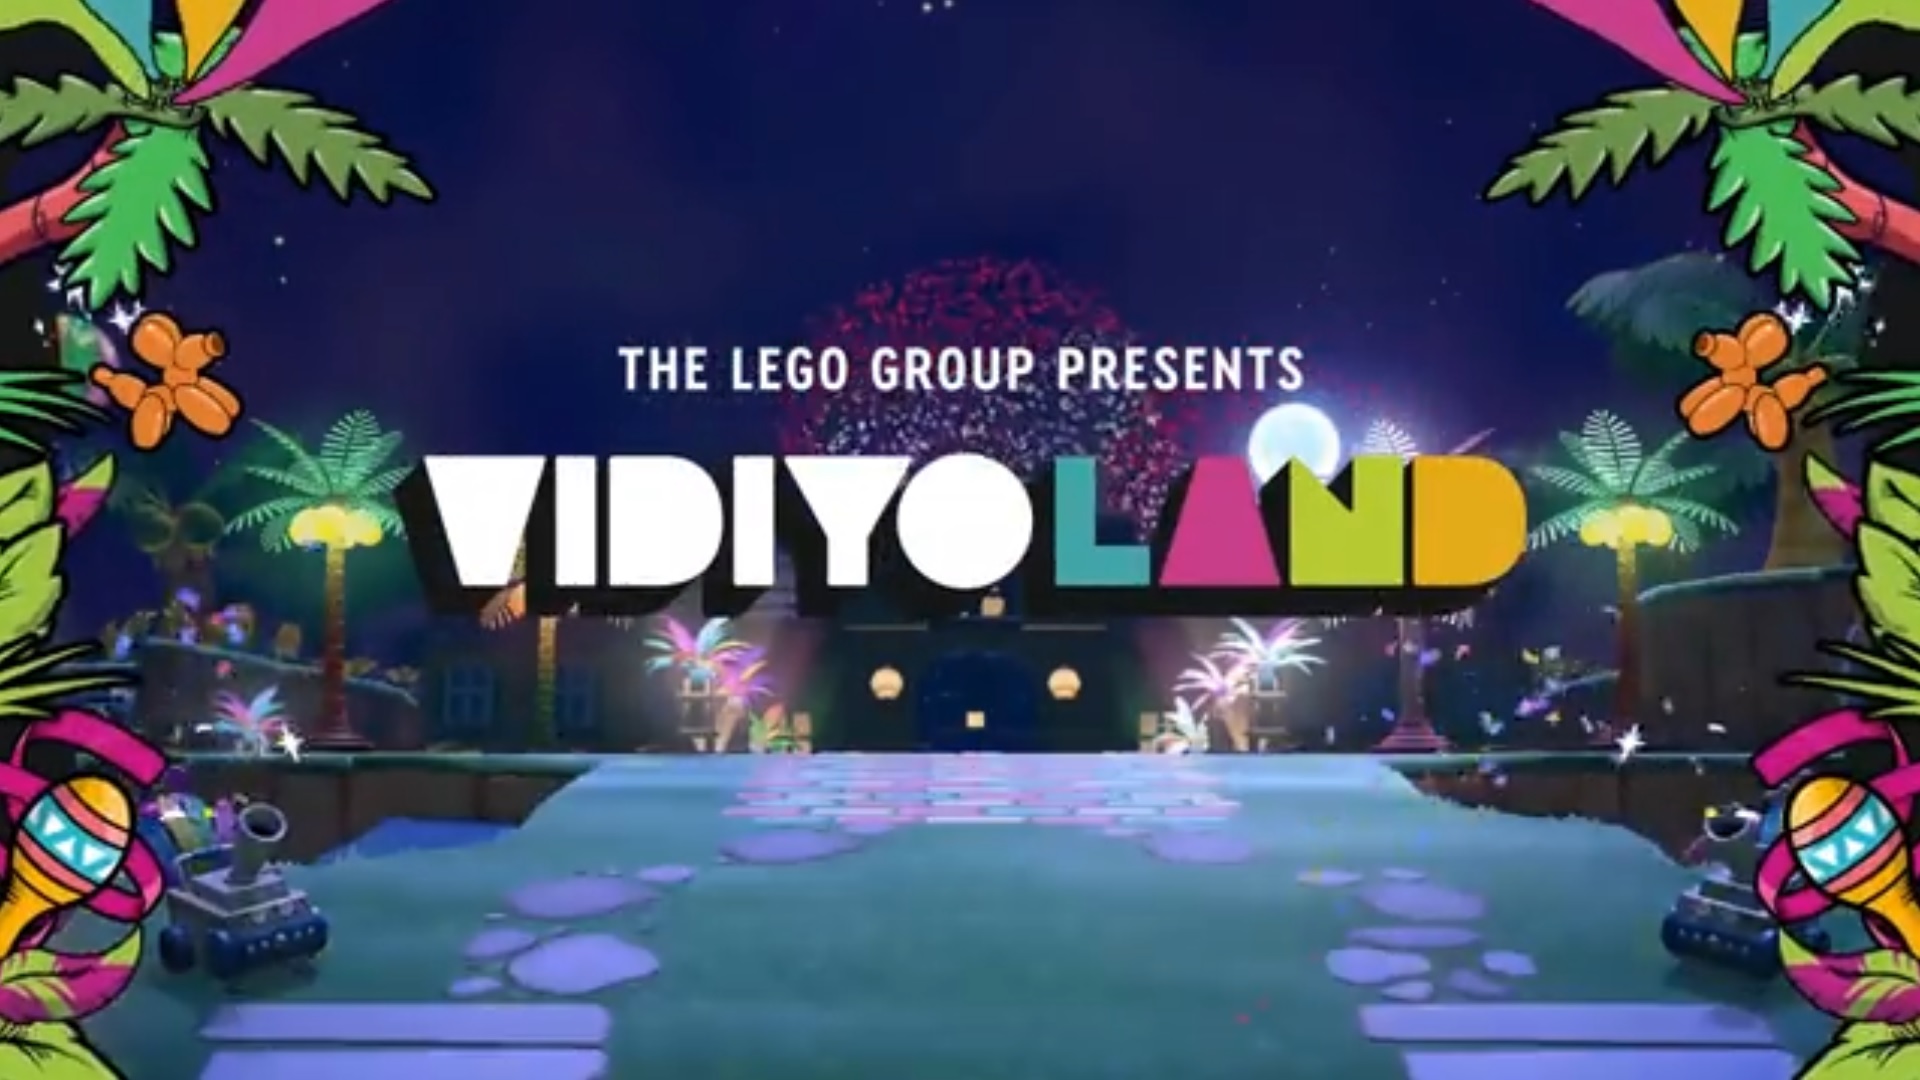 LEGO VIDIYOLAND is live in Animal Crossing: New Horizons